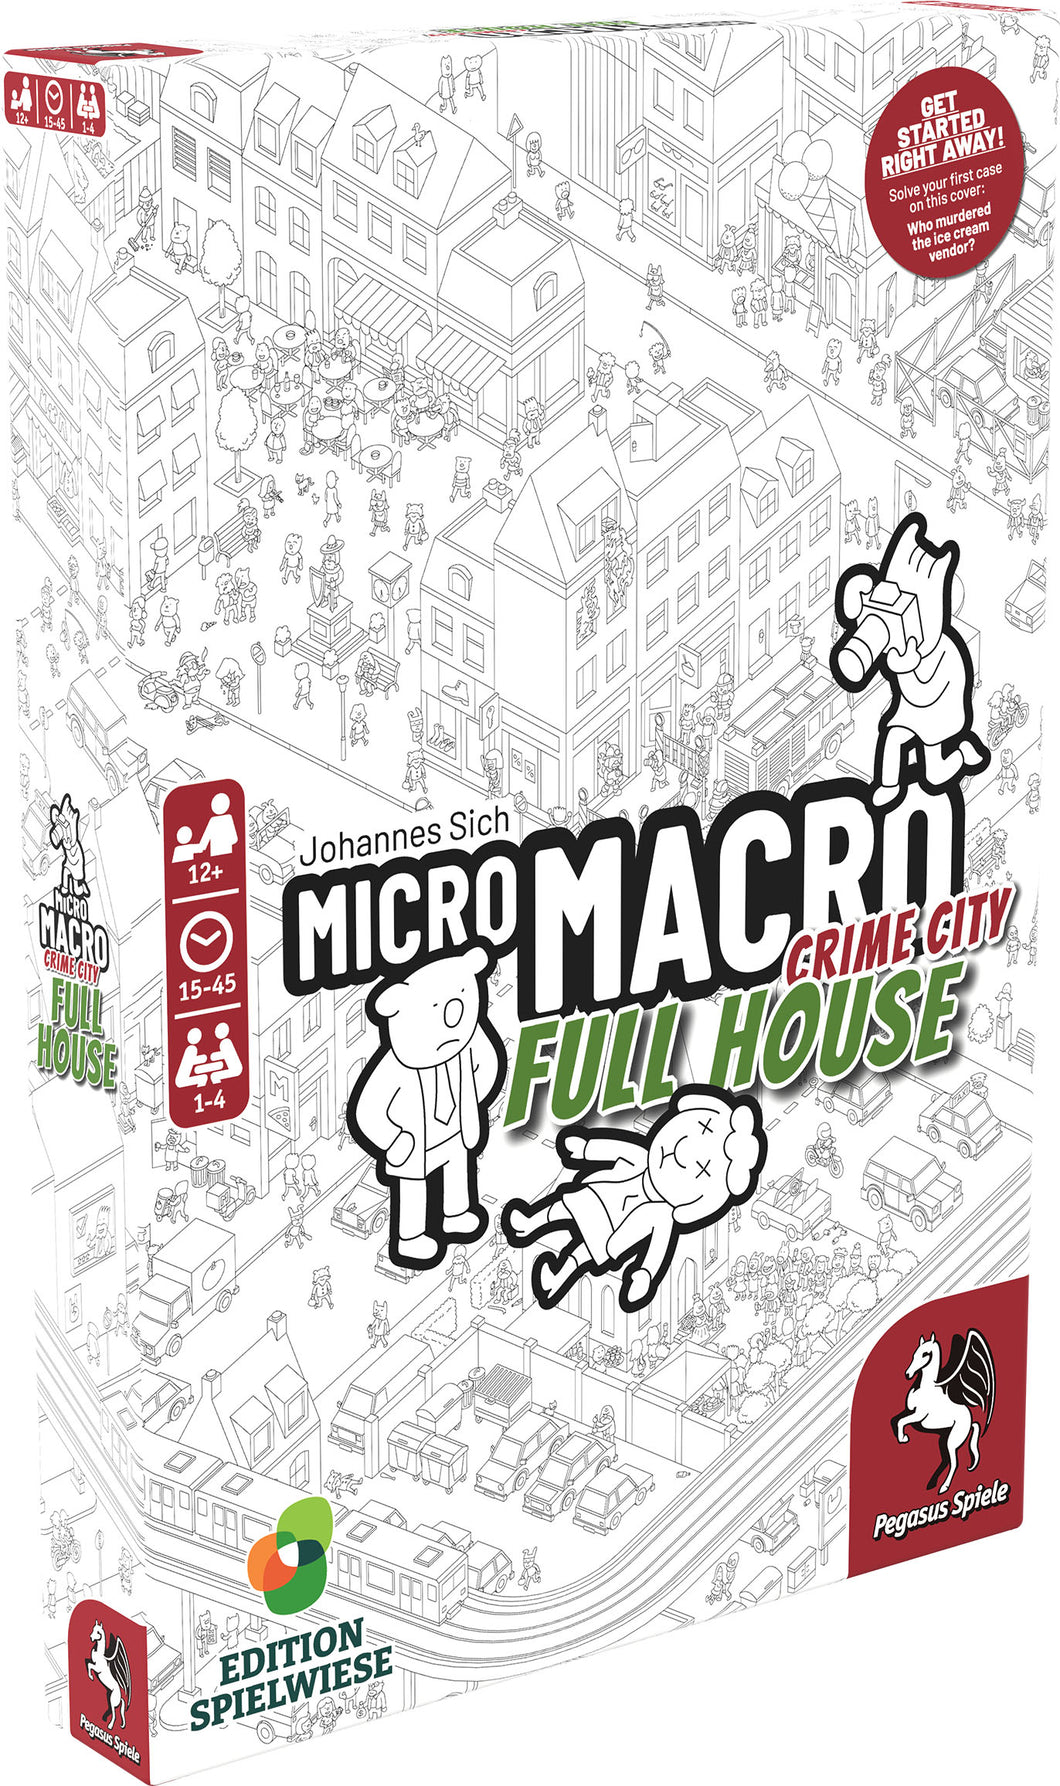 MicroMacro Crime City 2 Full House